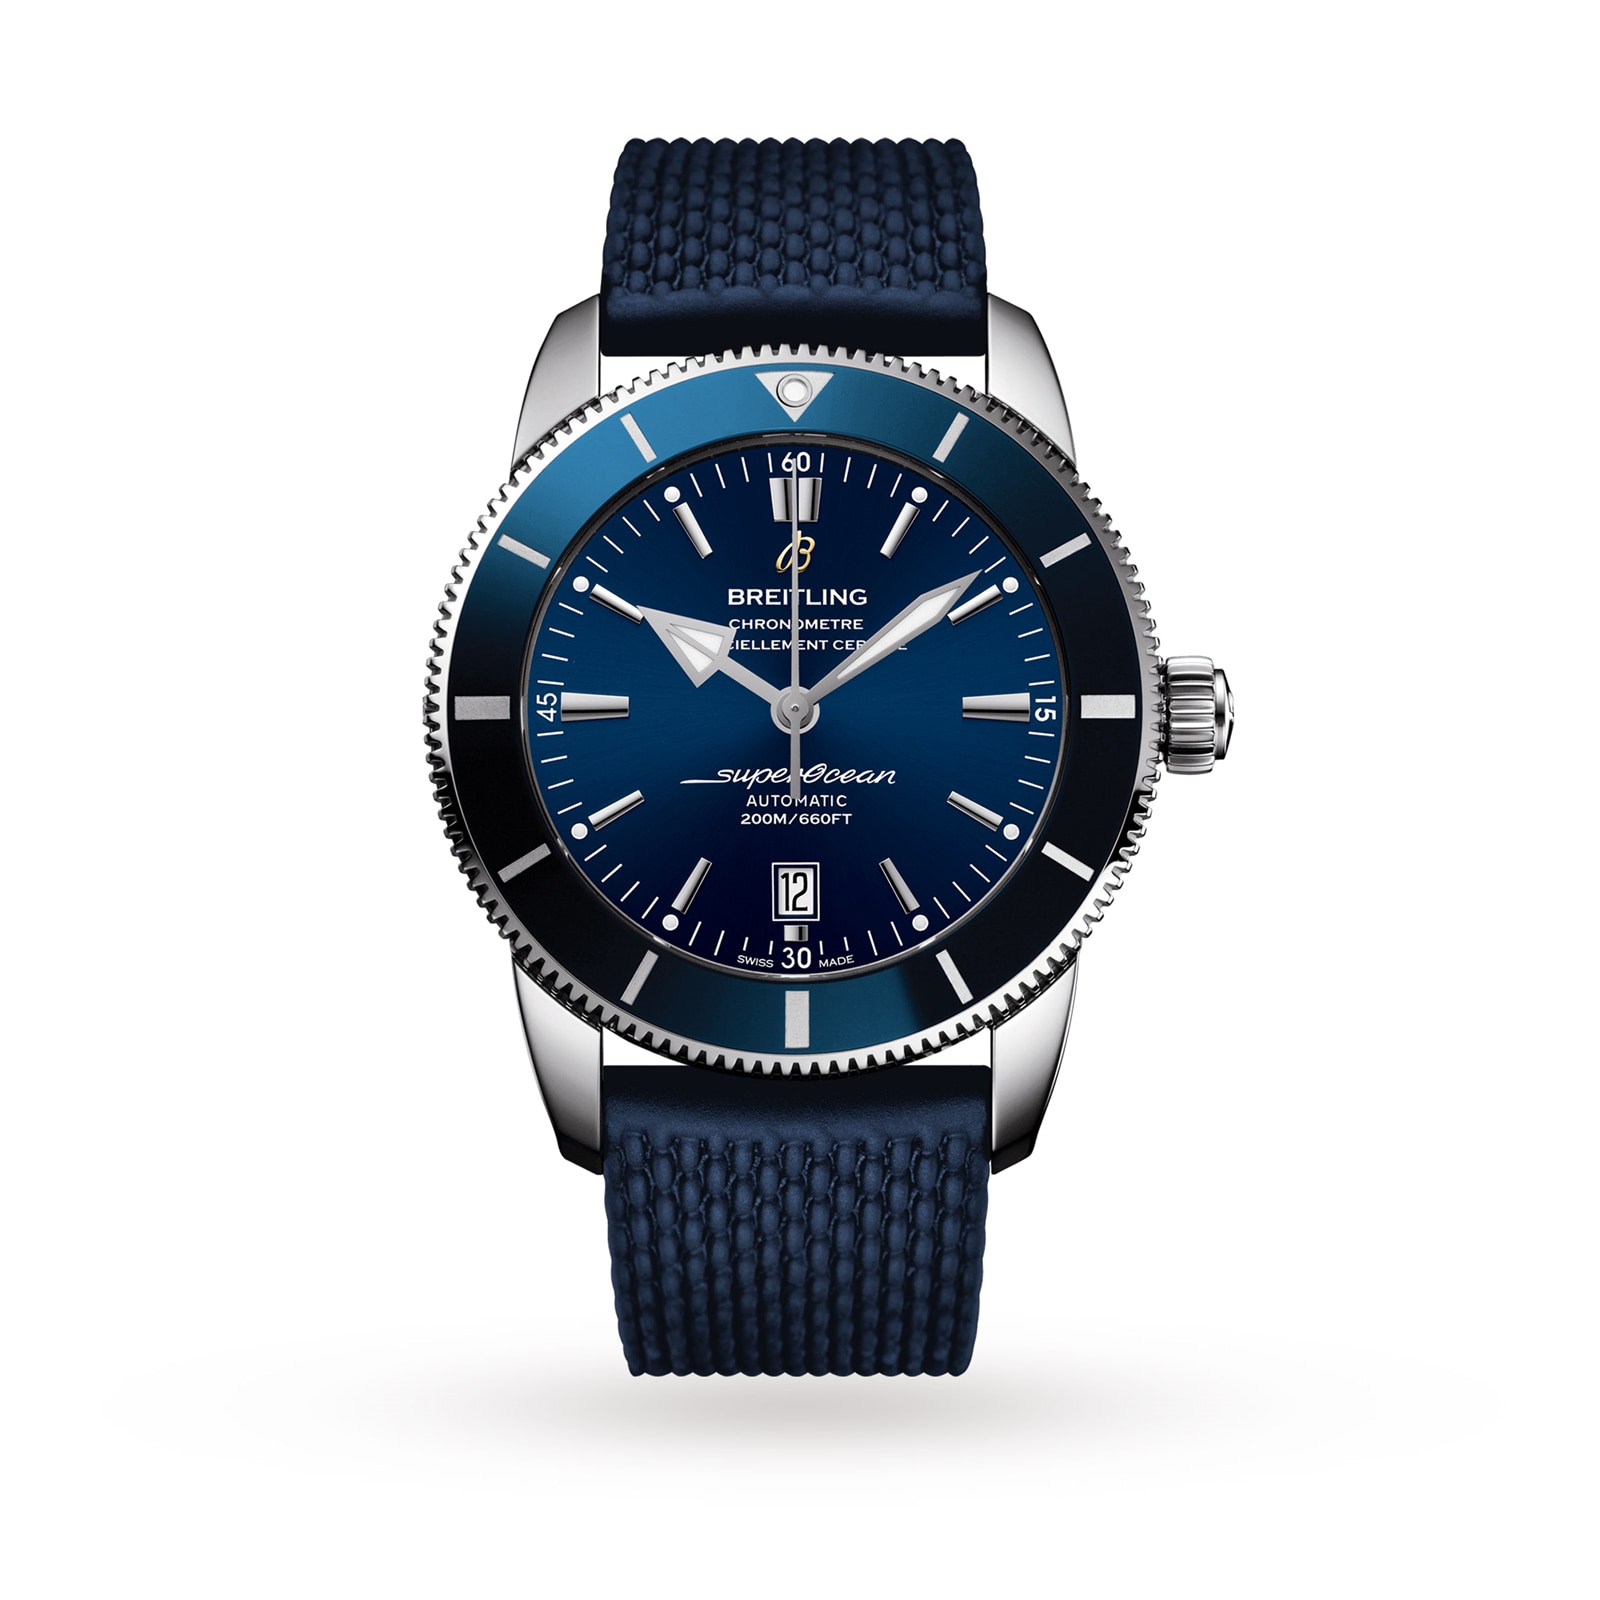 Best Luxury Watch under 5k - Breitling Superocean. Credit: Breitling